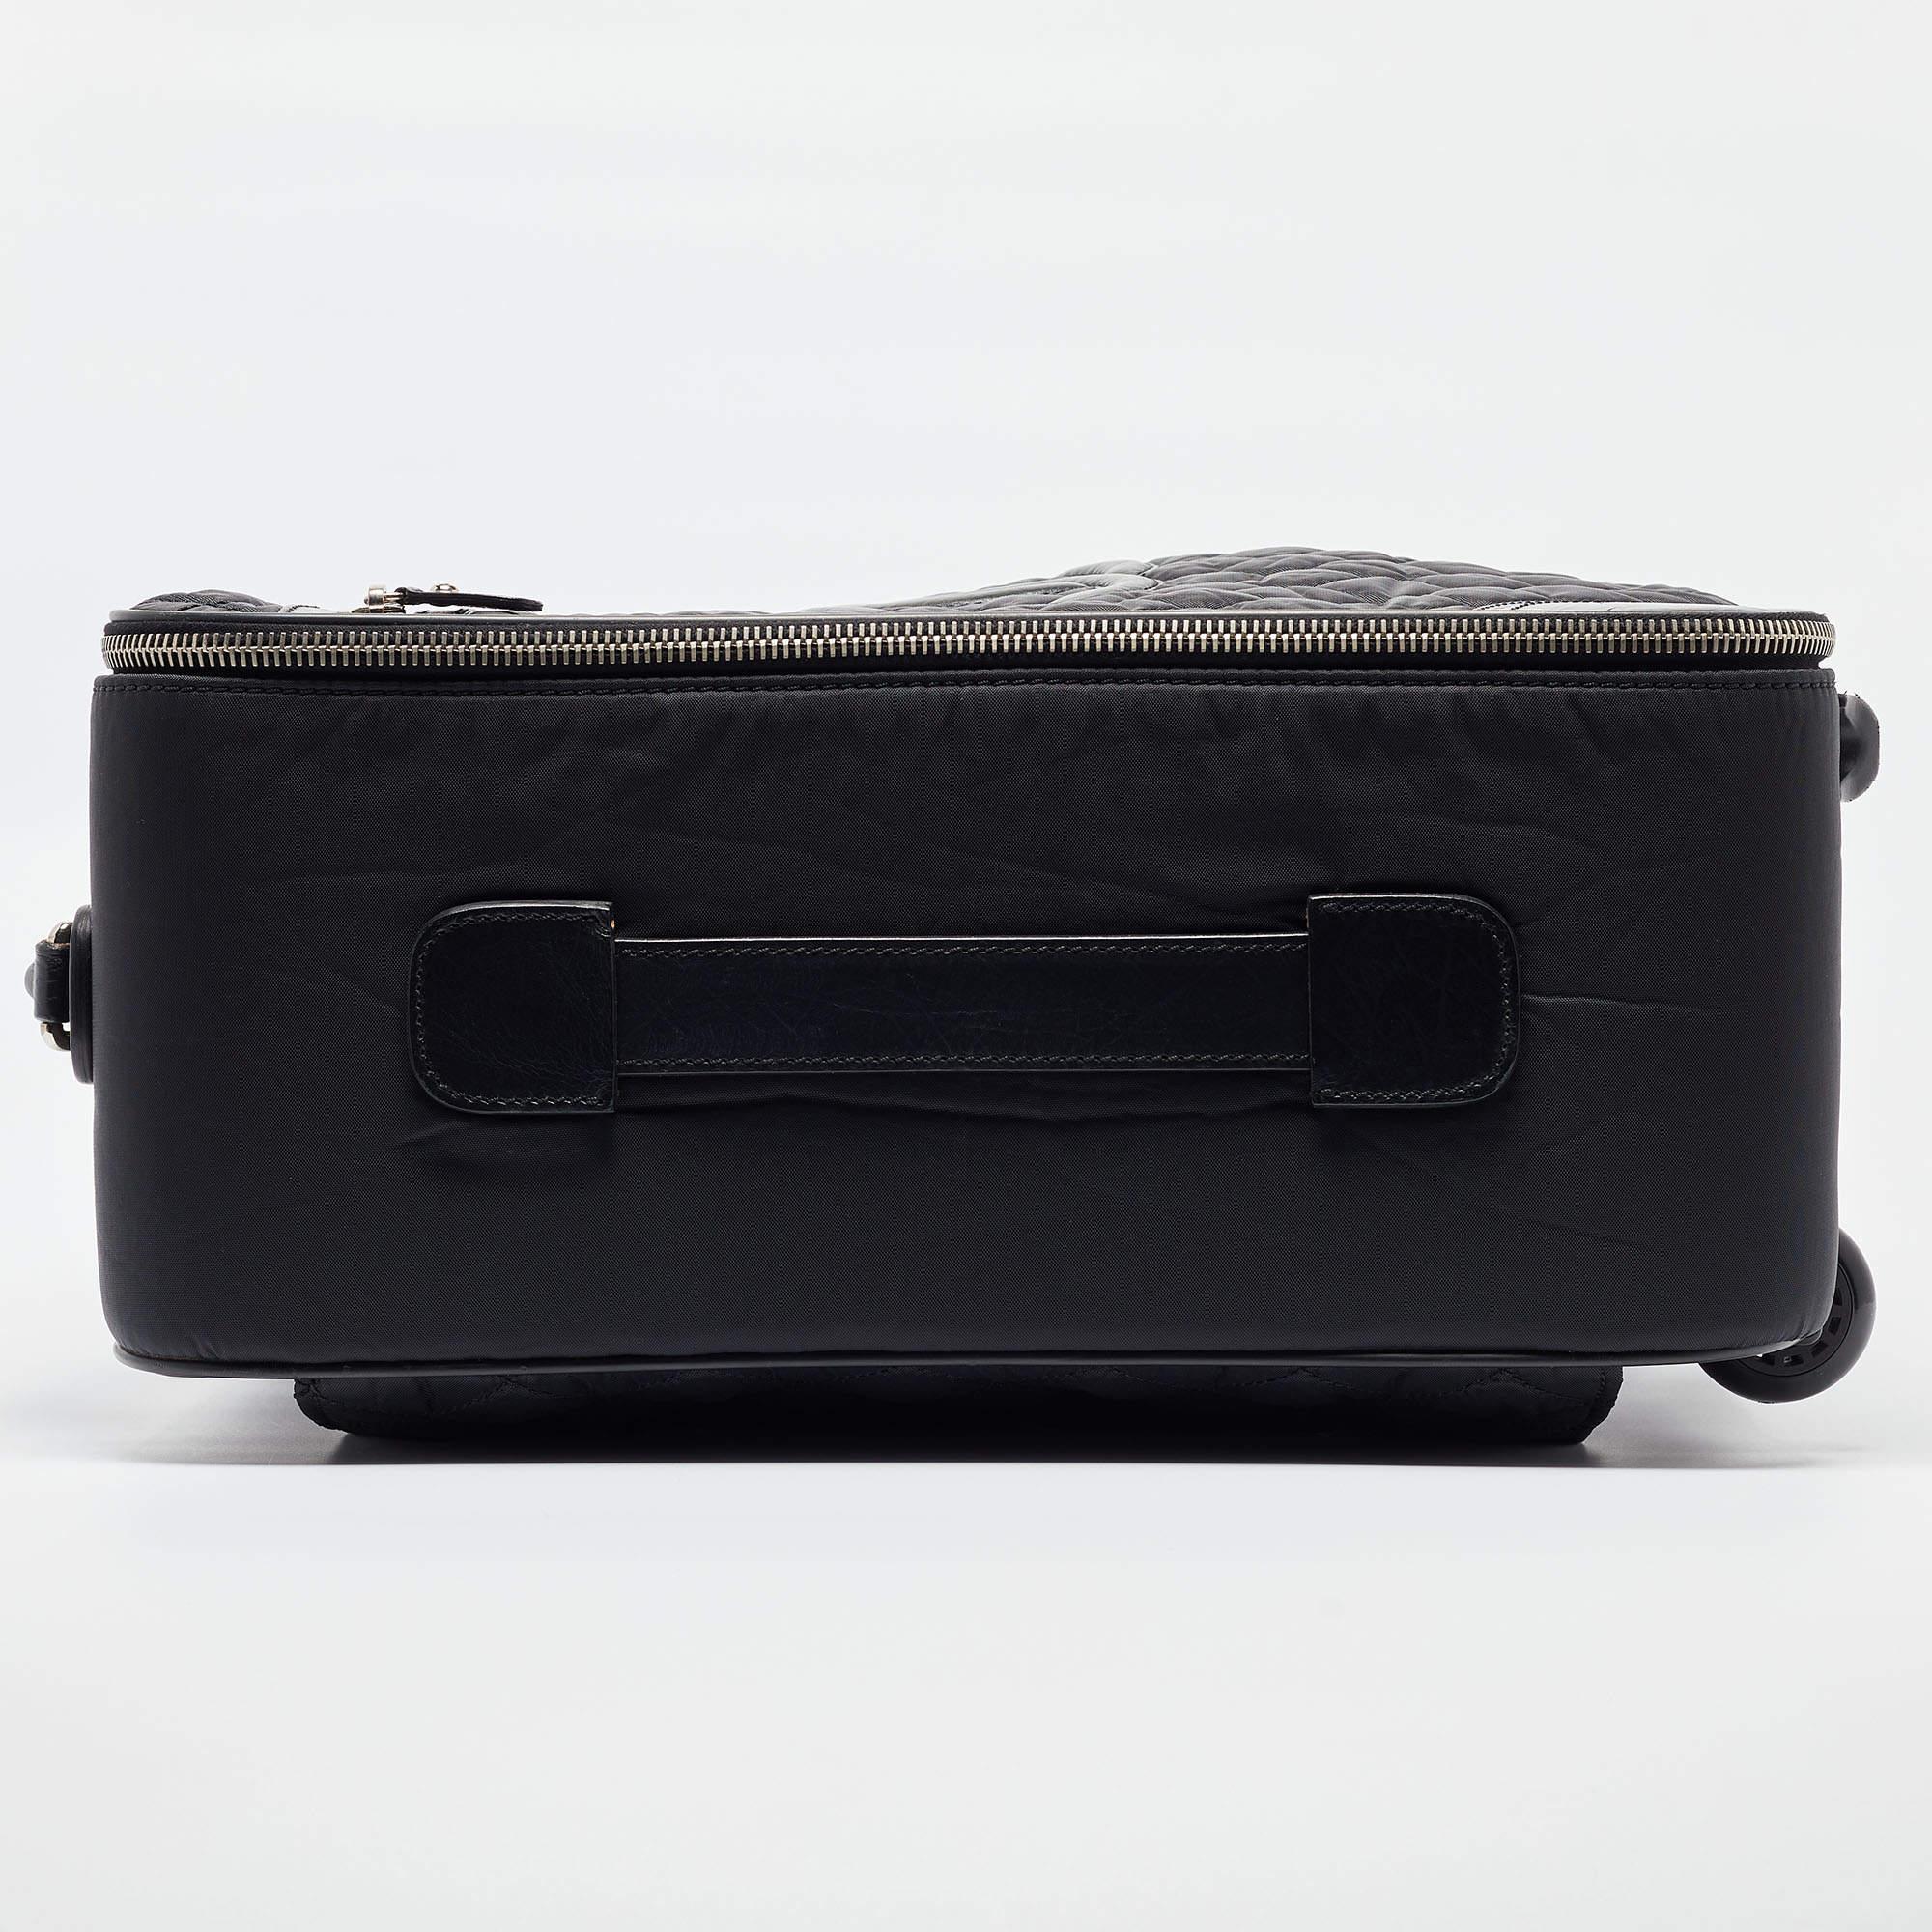 Chanel Black Quilted Nylon 2 Wheeled CC Luggage (Bagages à 2 roues en nylon matelassé) 9